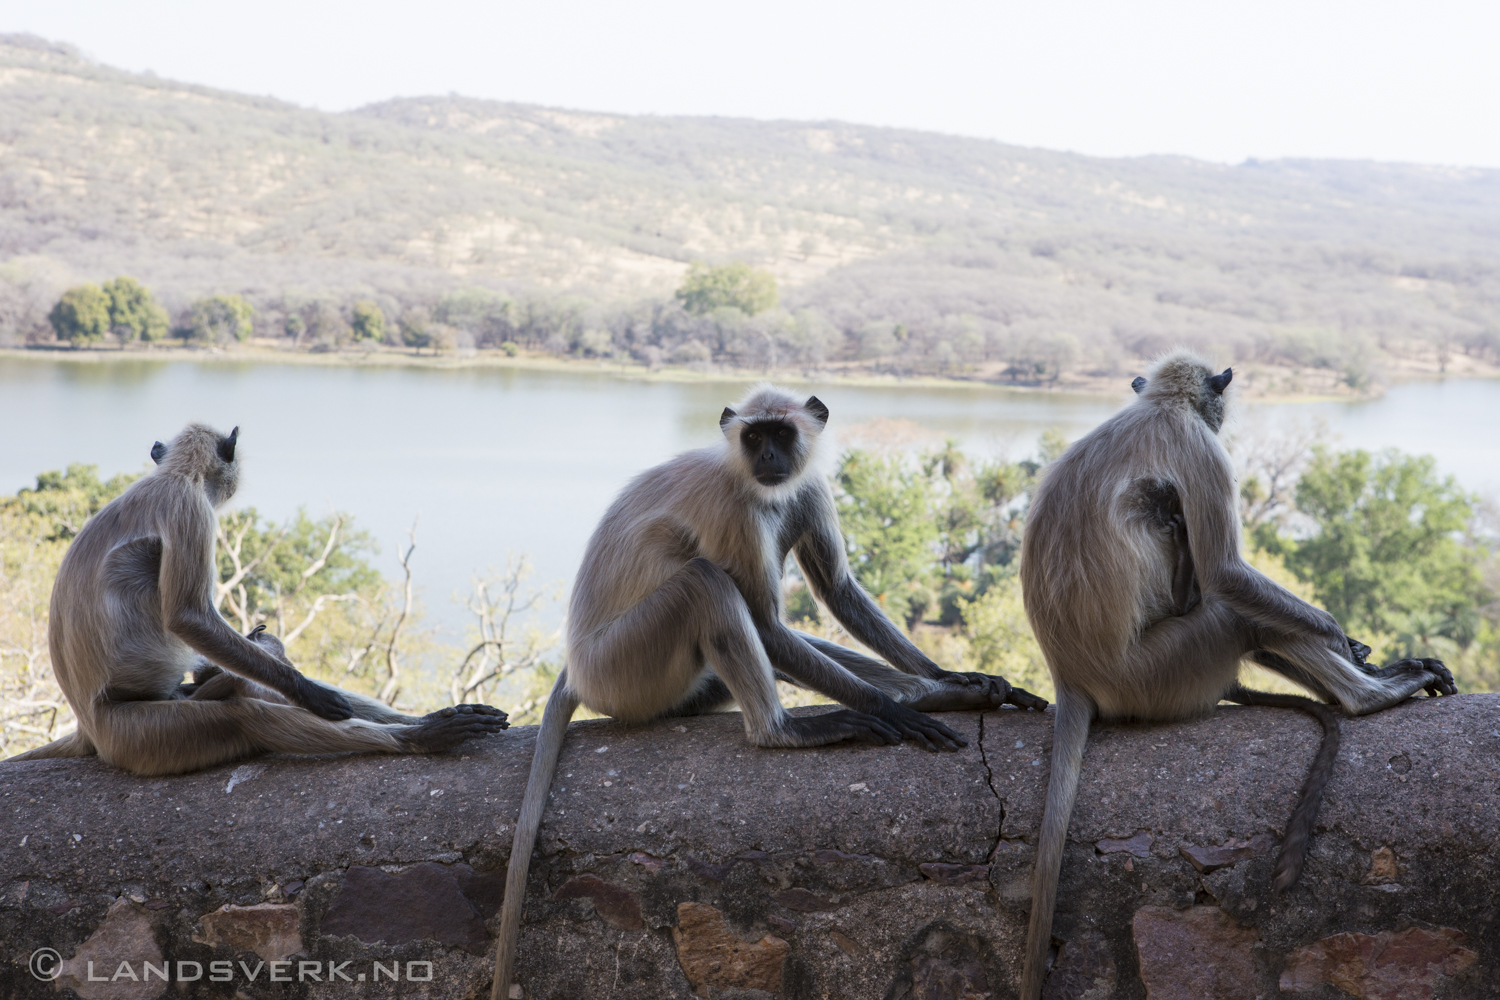 Wild hanuman monkey. Ranthambore, India. 

(Canon EOS 5D Mark III / Canon EF 24-70mm f/2.8 L USM)